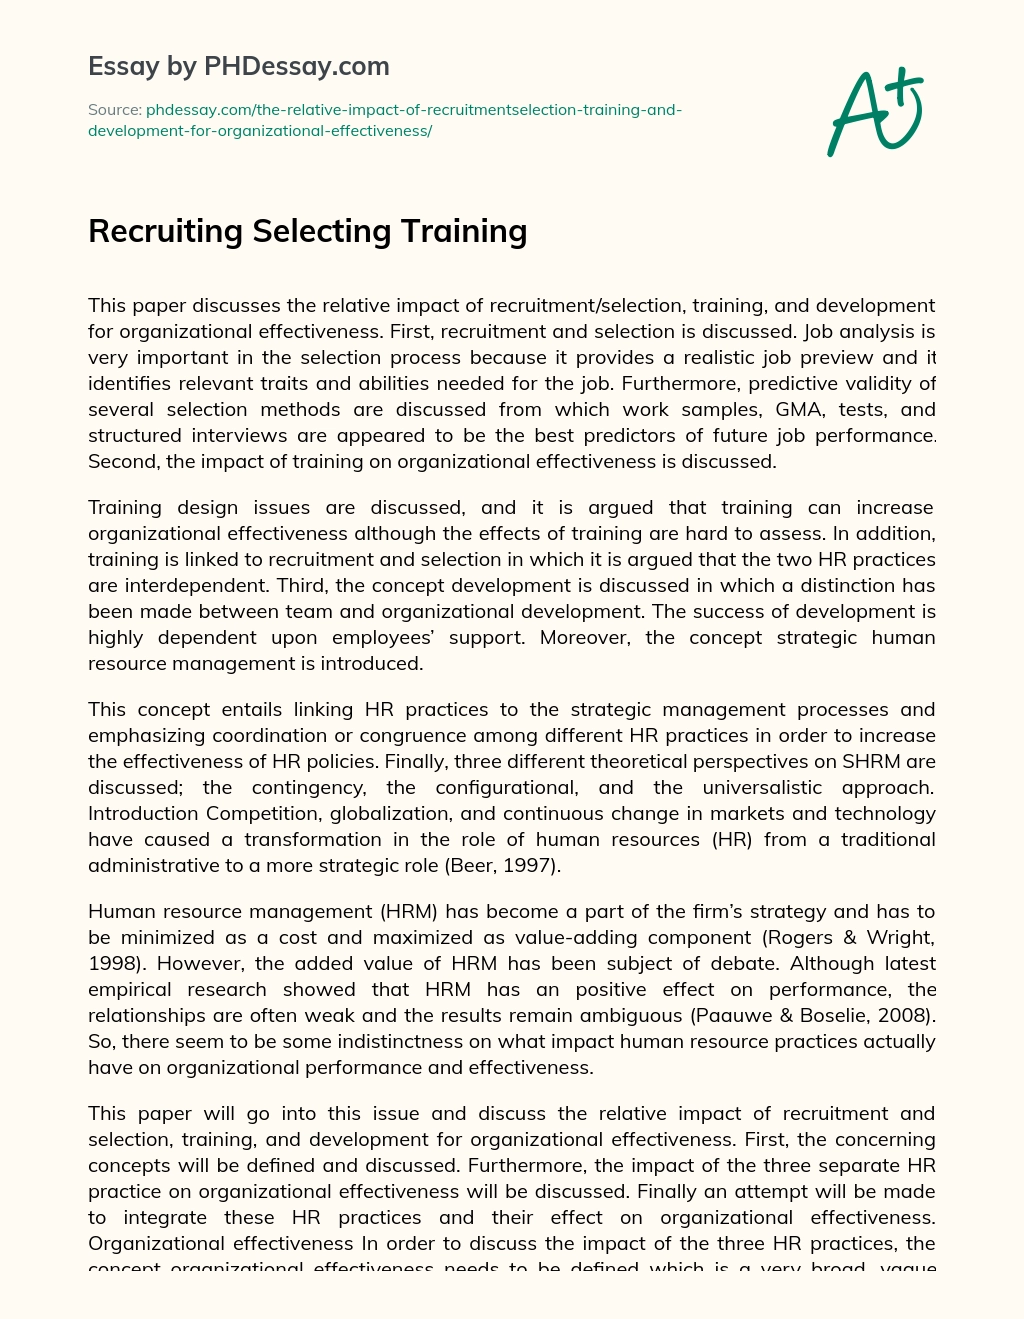 Recruiting Selecting Training essay